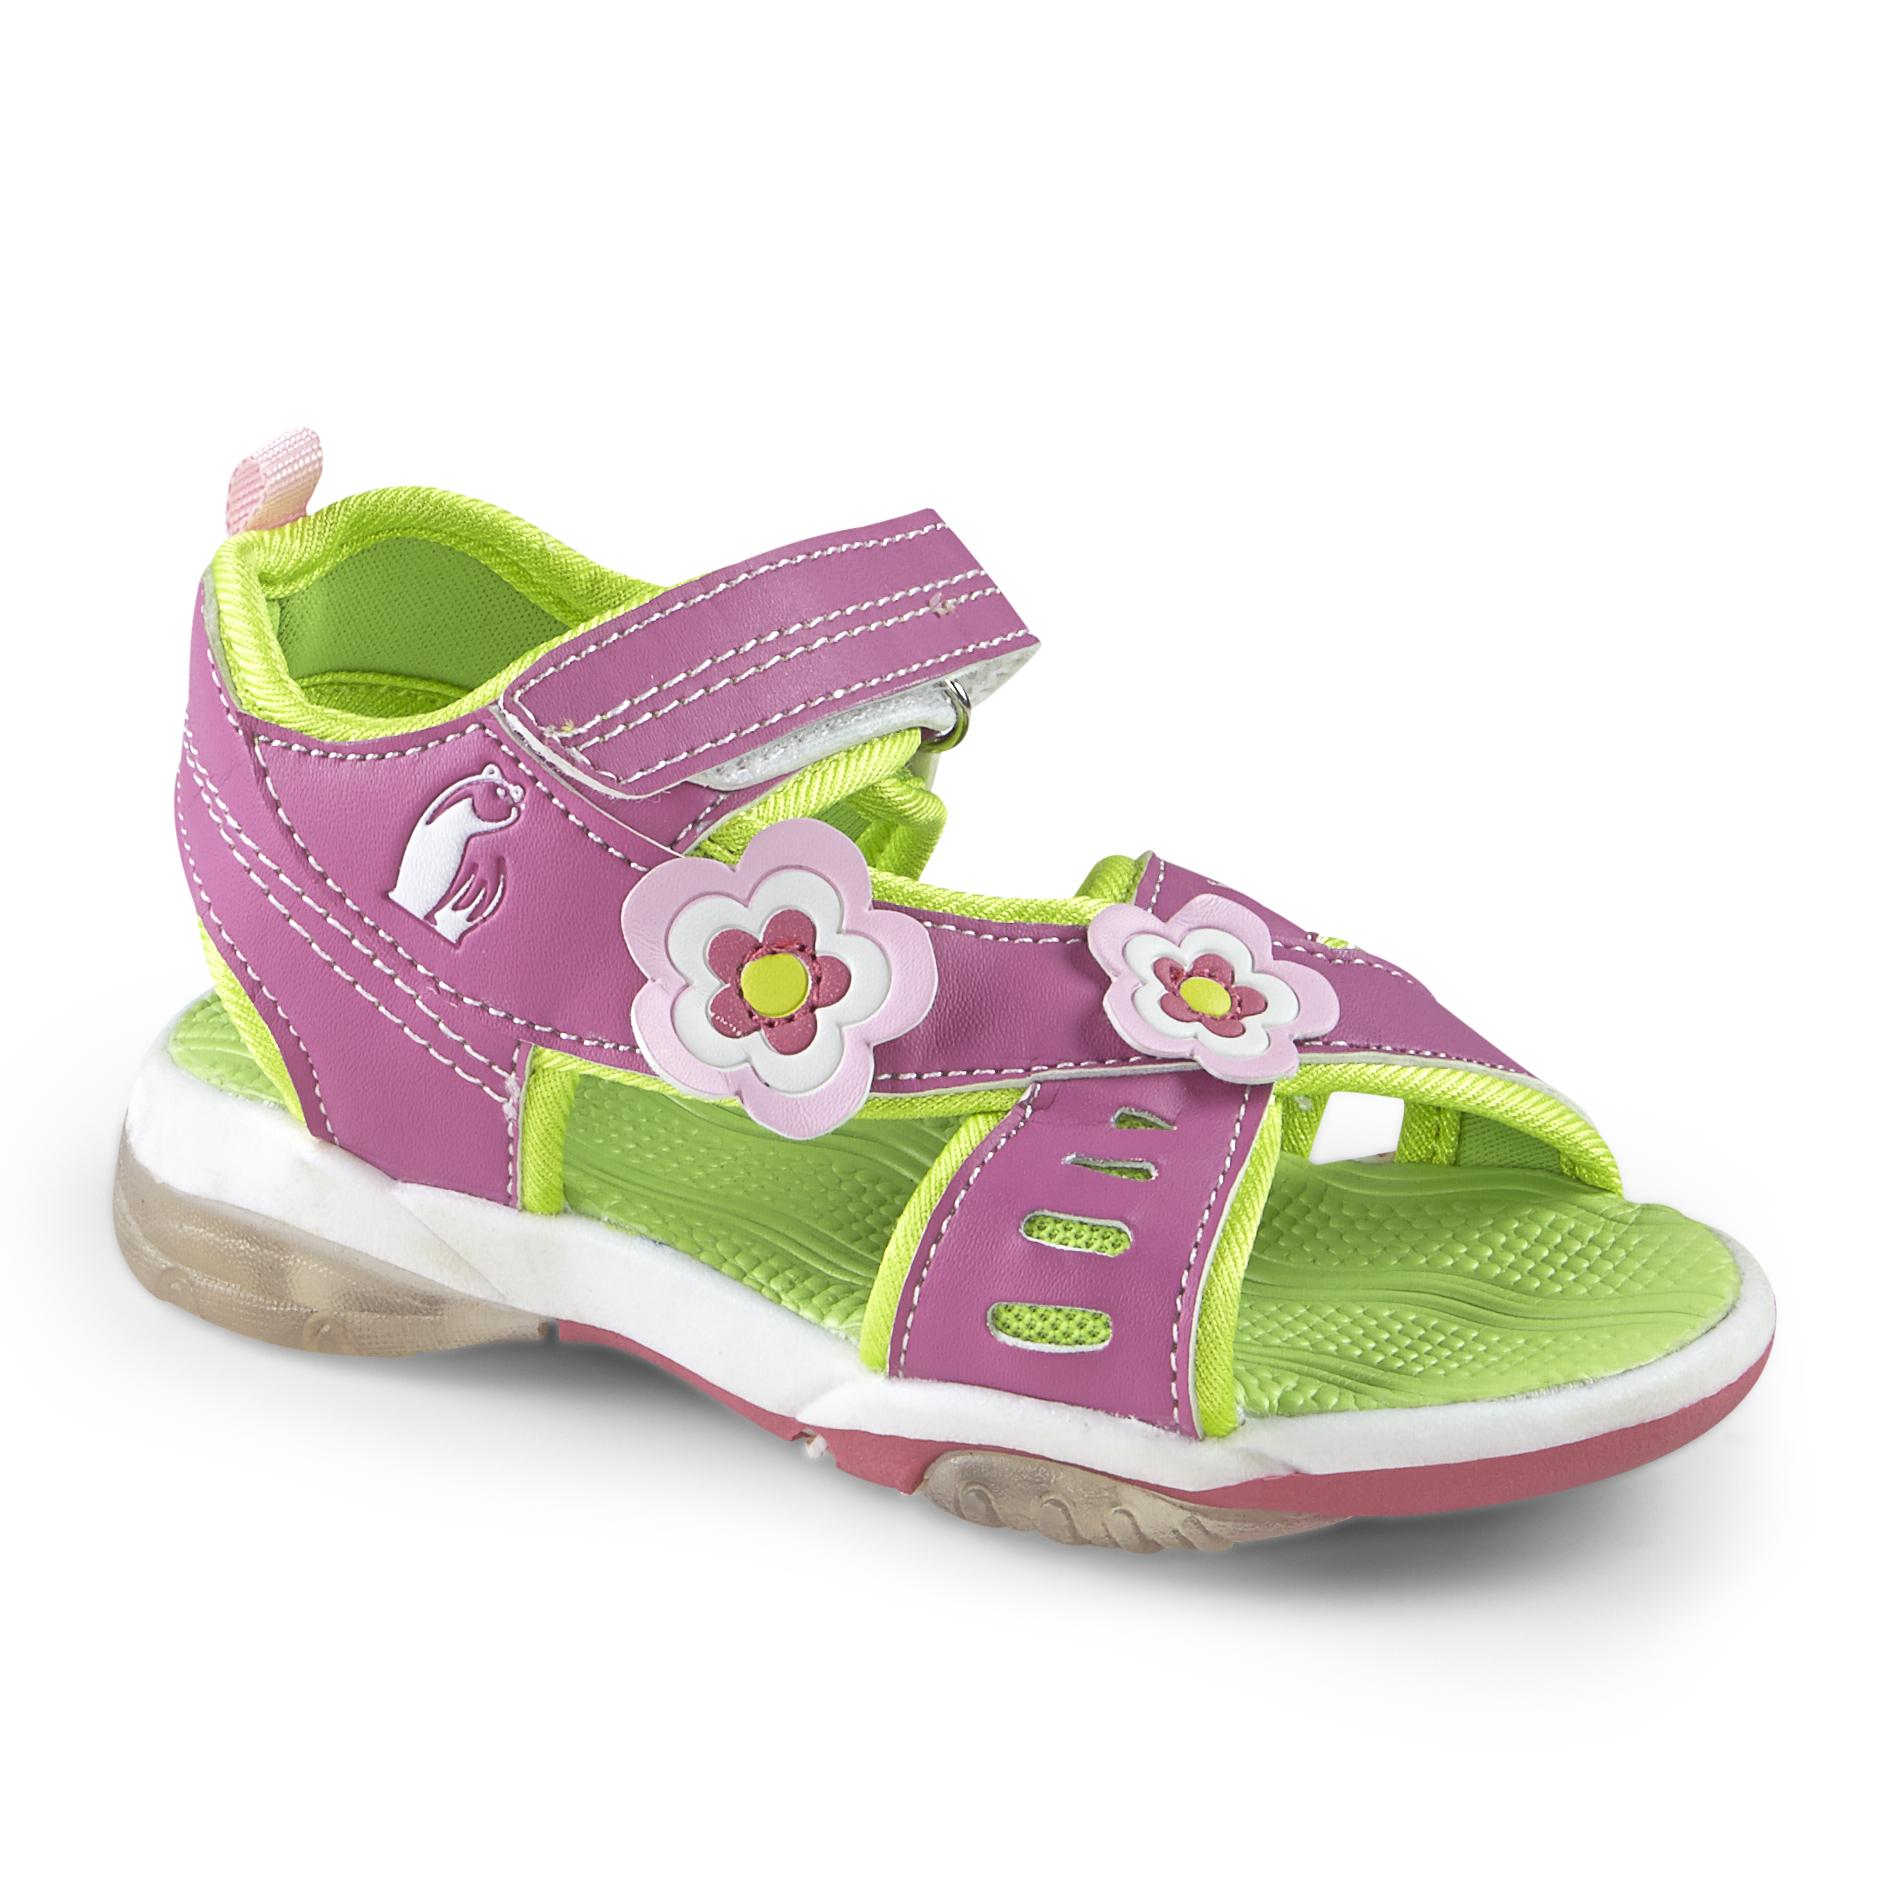 &nbsp; Toddler Girl's RB4016 Pink/Neon Green Athletic Sandal